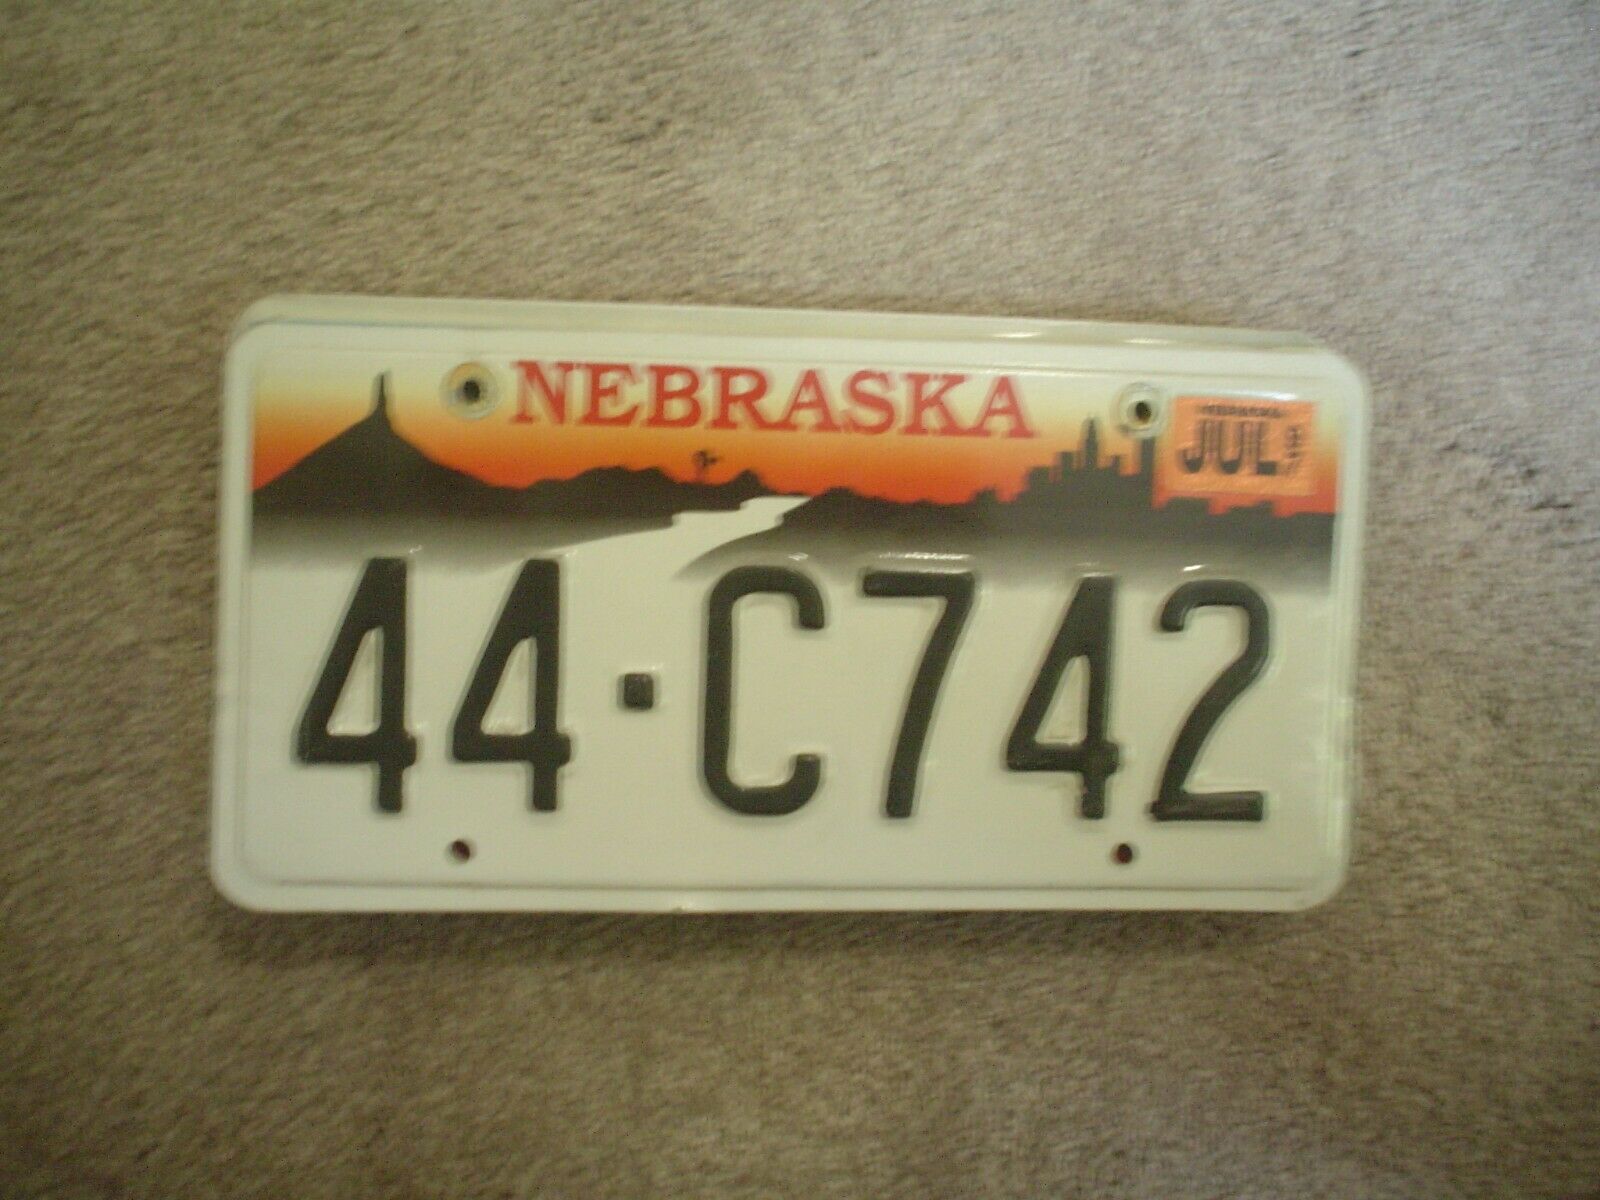 Nebraska Sunset  License Plate Buy All States Here Free Shipping